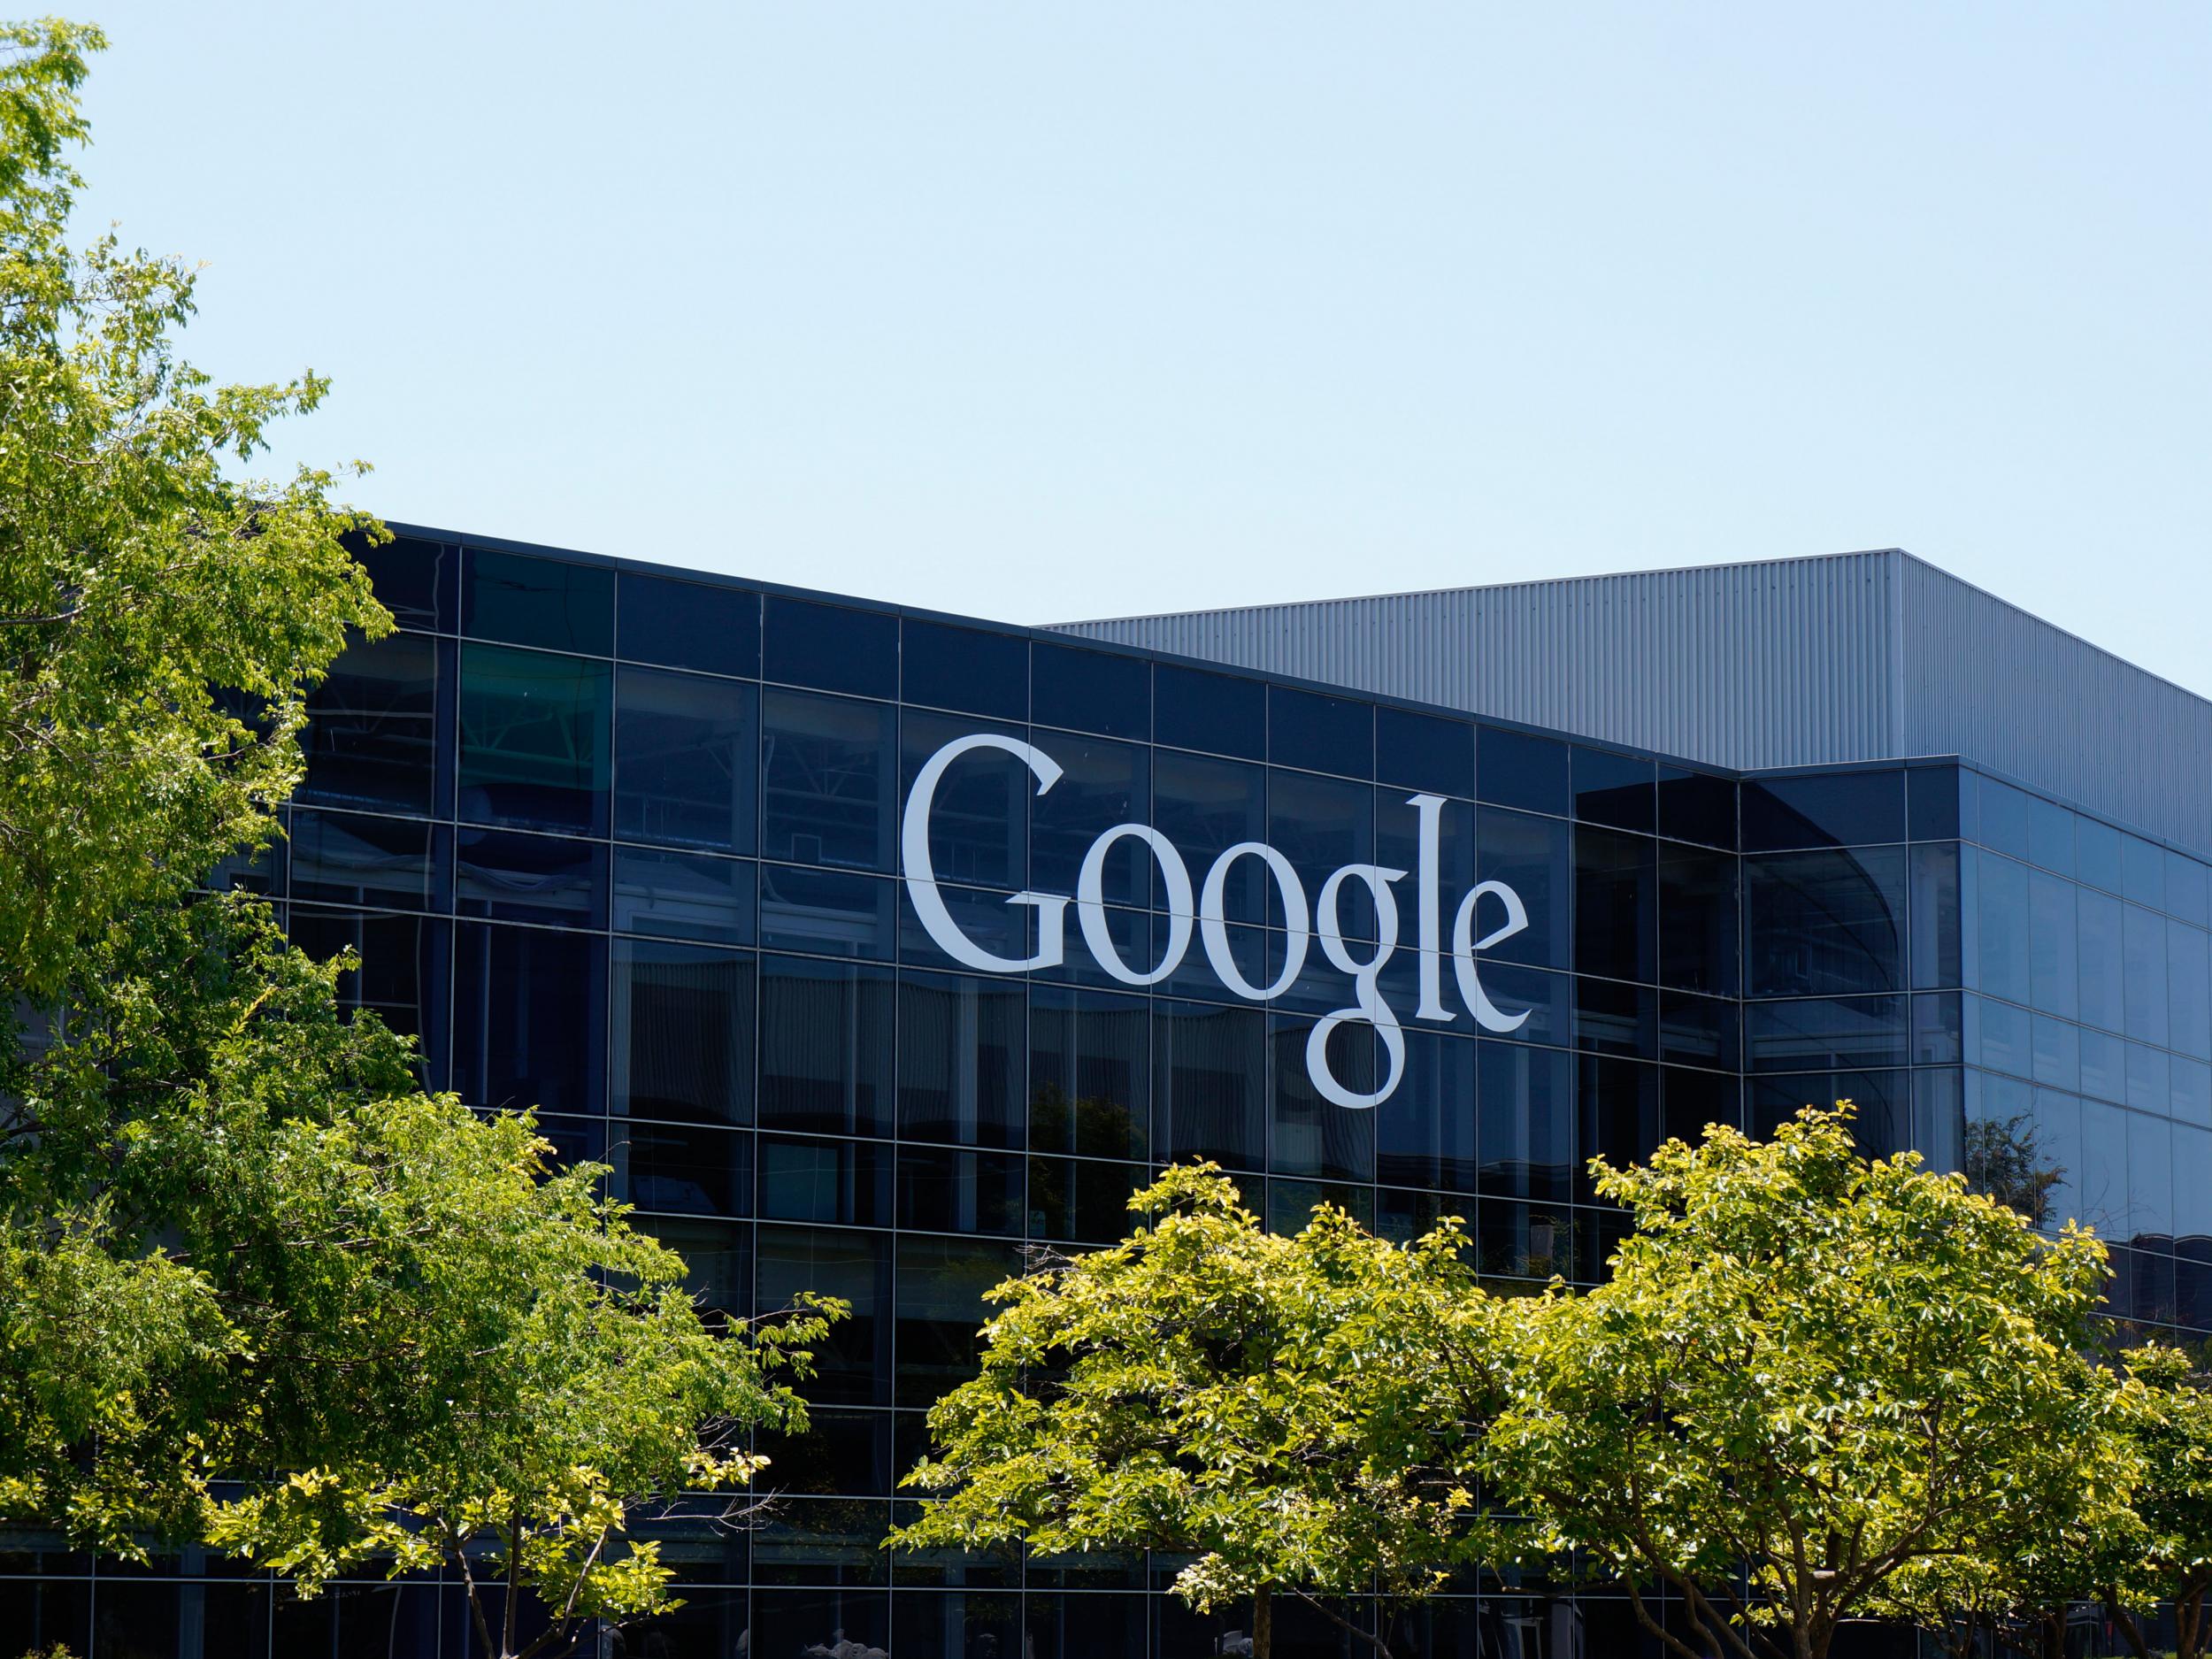 Google's headquarters in California